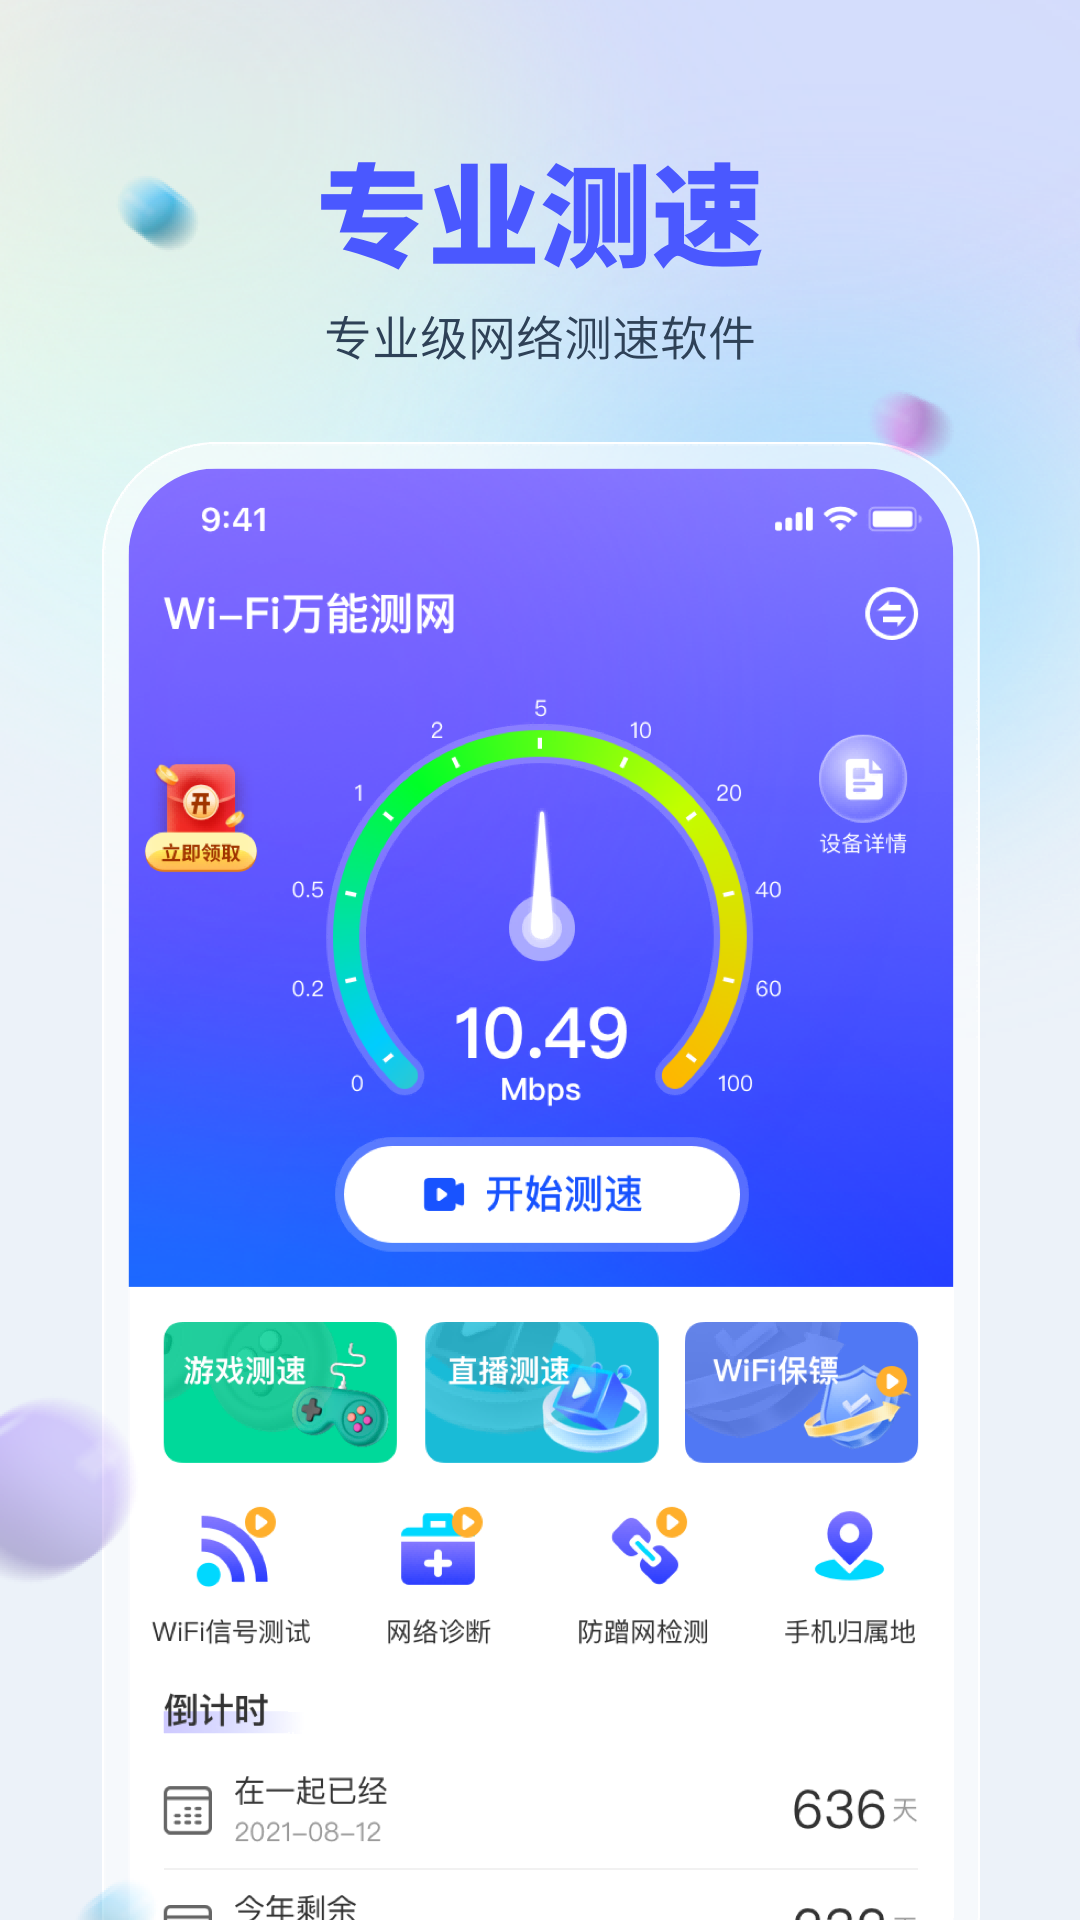 WiFi万能测网app下载,WiFi万能测网app官方版 v1.0.0